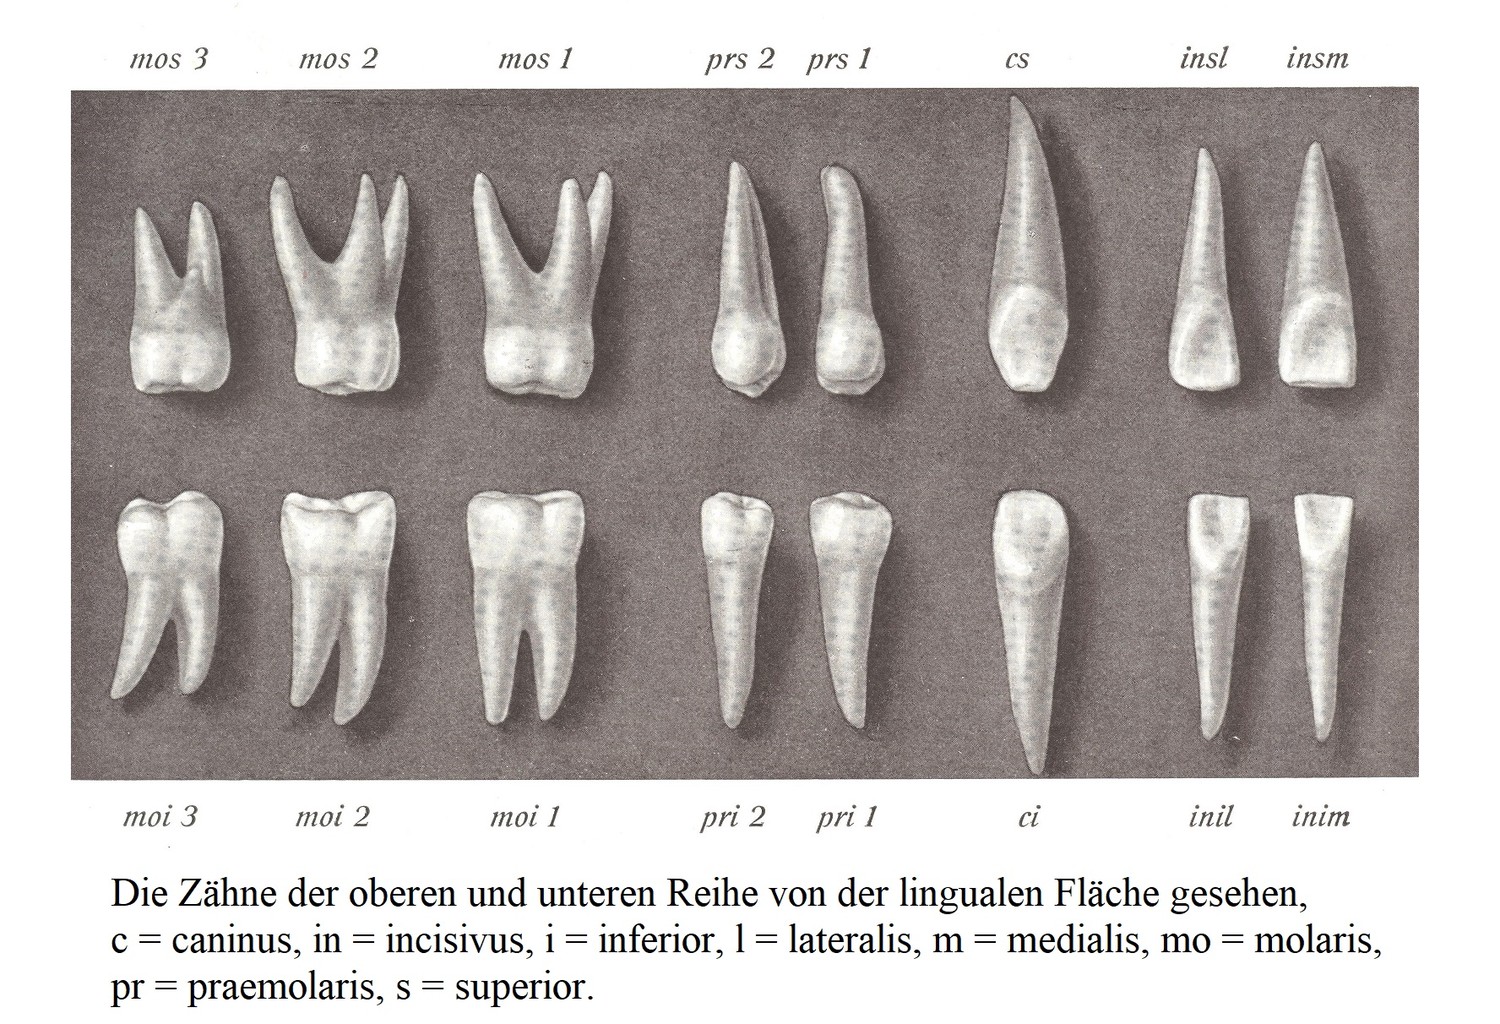 Зубы верхнего и нижнего ряда, вид с язычной поверхности, c = caninus, in = incisivus, i = inferior, l = lateralis, m = medialis, mo = molaris, pr = praemolaris, s = superior.